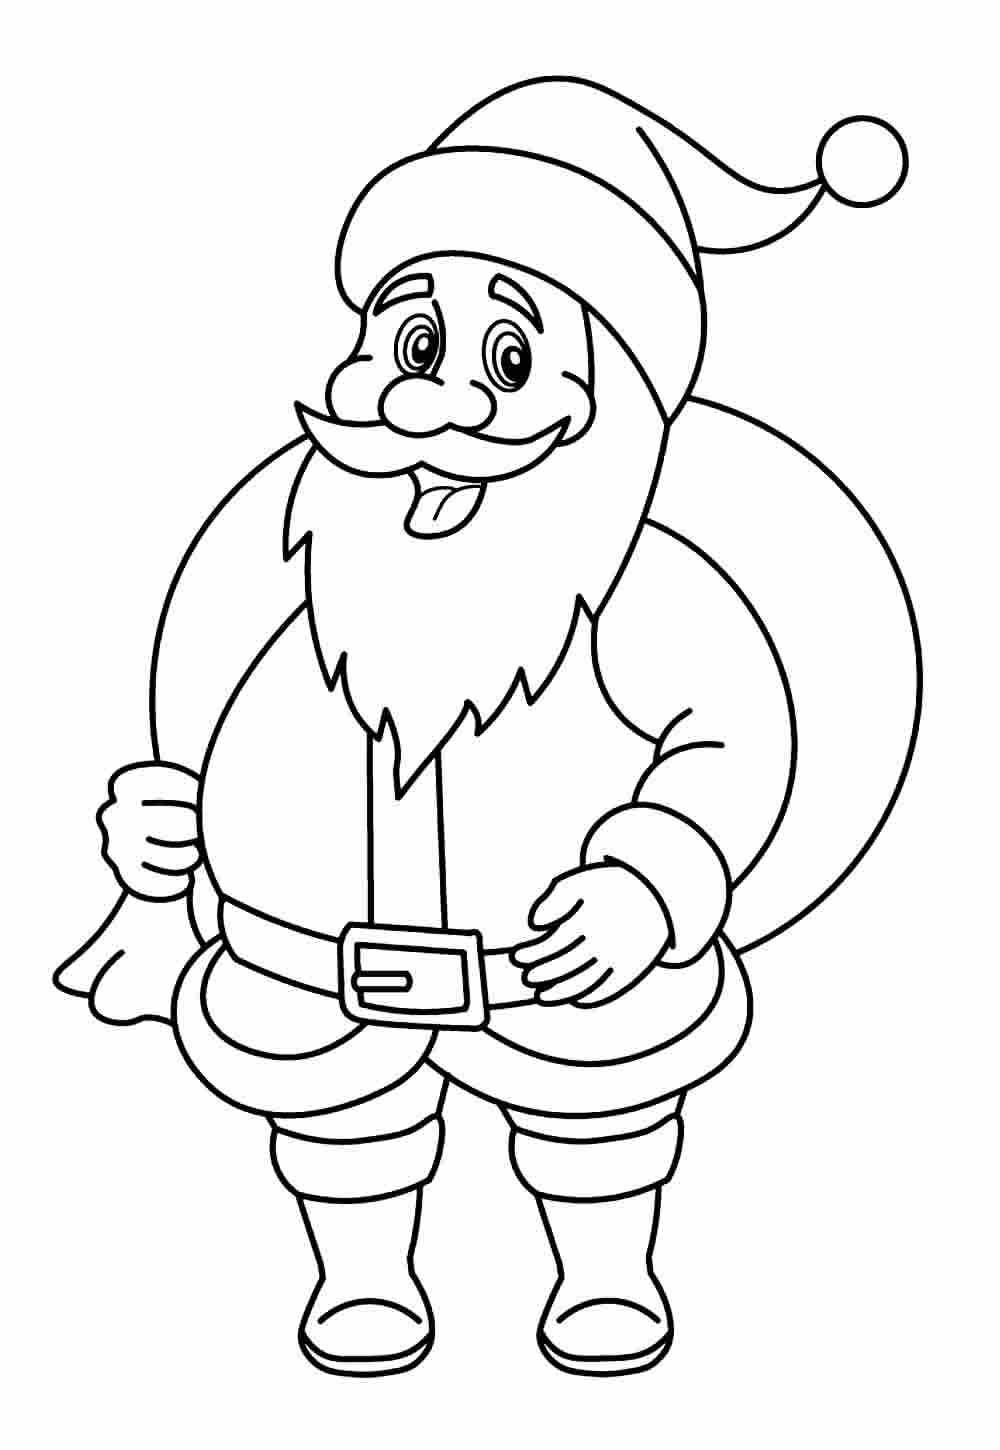 Desenho para imprimir e colorir de Papai Noel